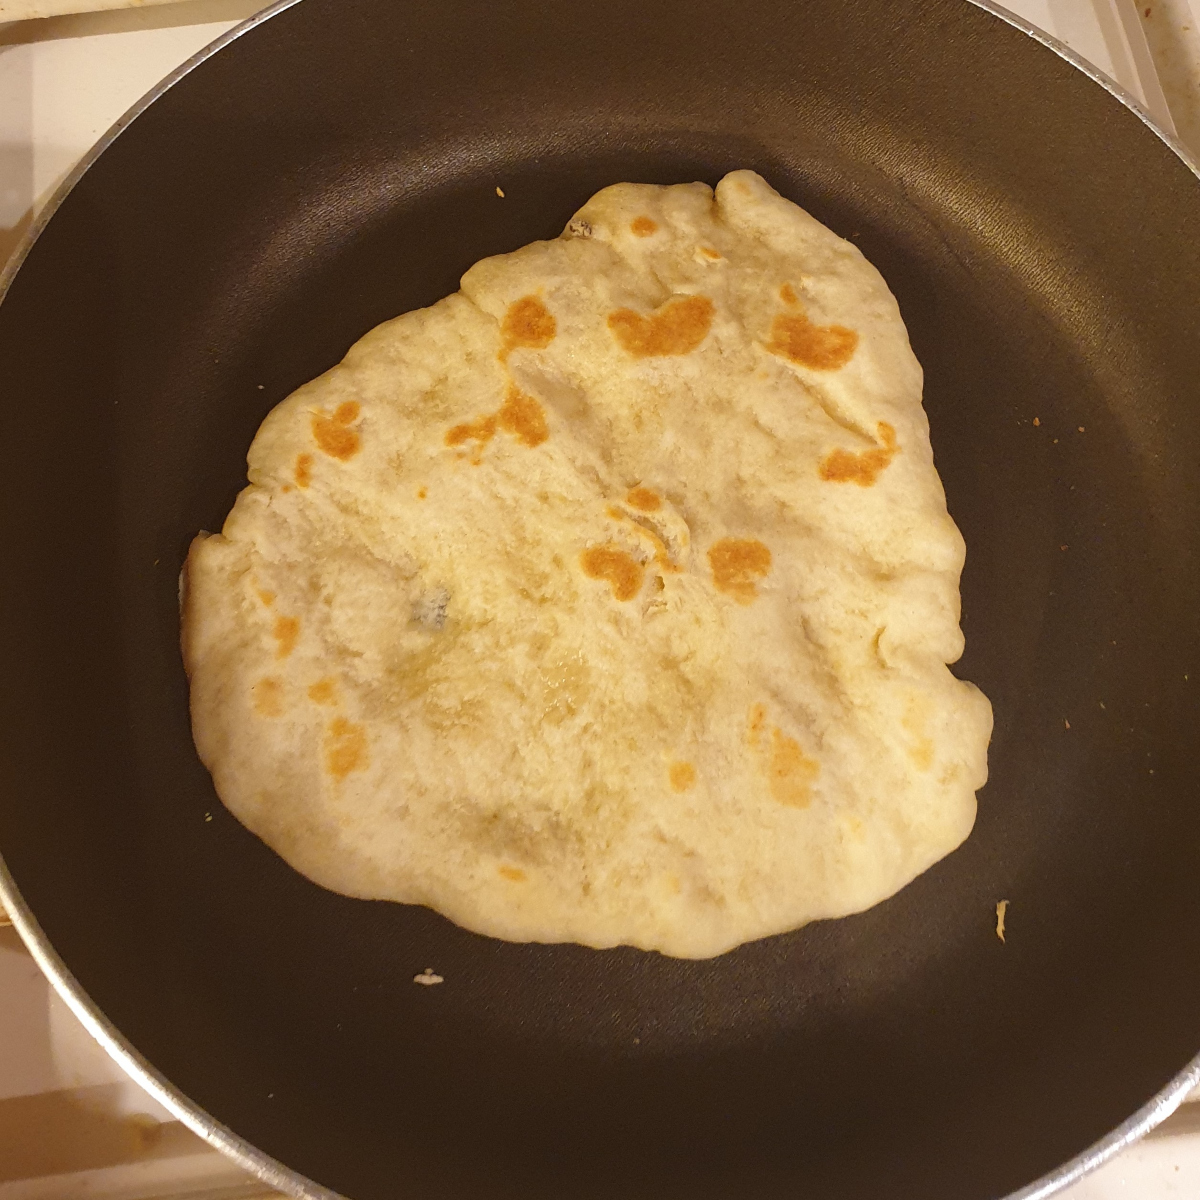 Homemade naan bread in a frying pan.